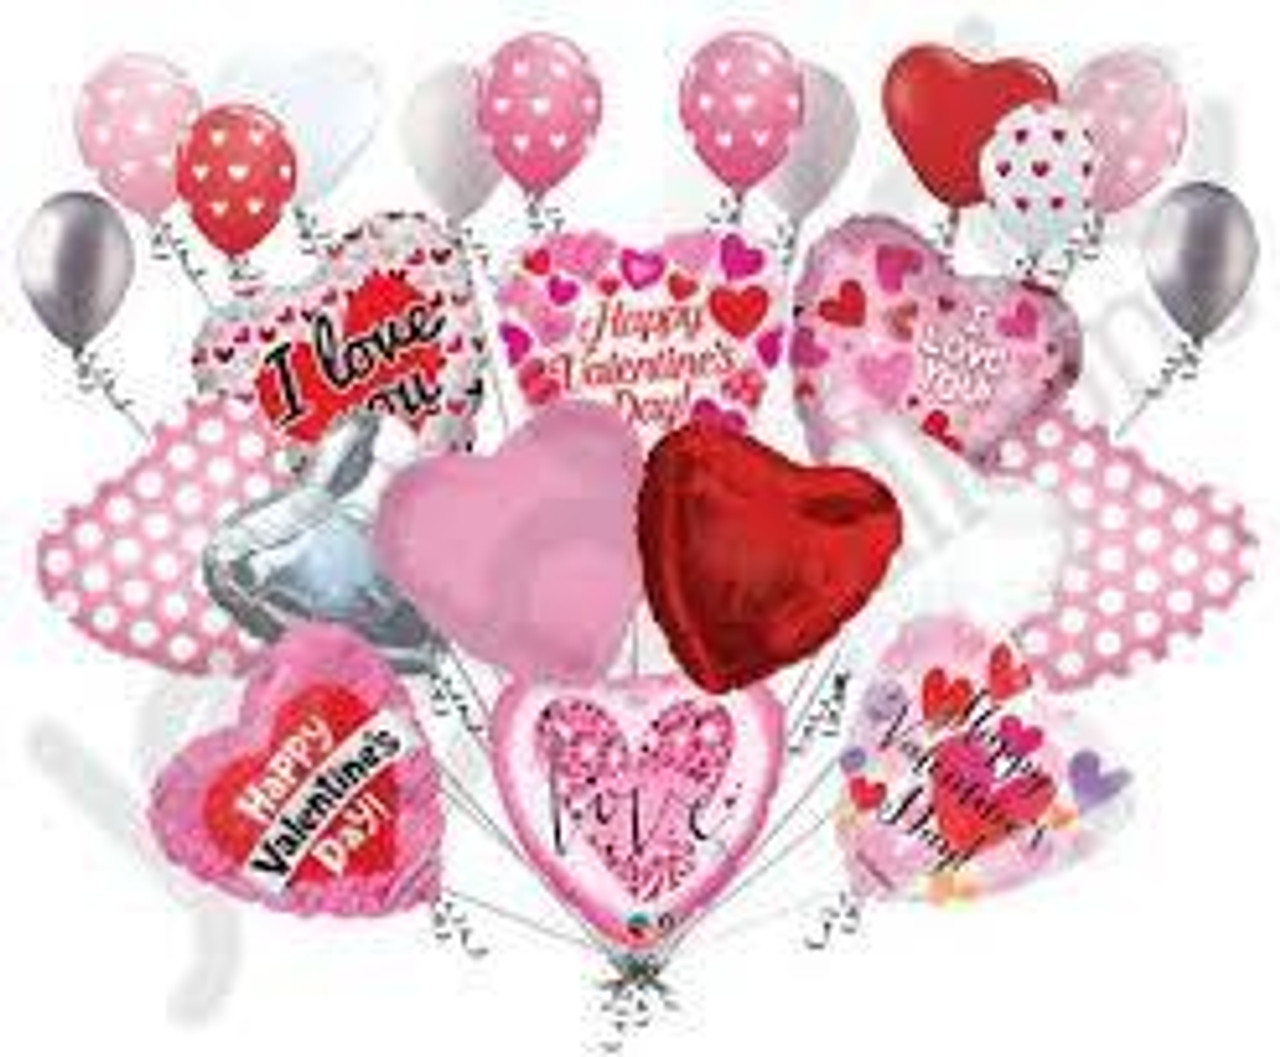 Large range of Helium filled Single Valentine Foils from $13.95 (standard size)